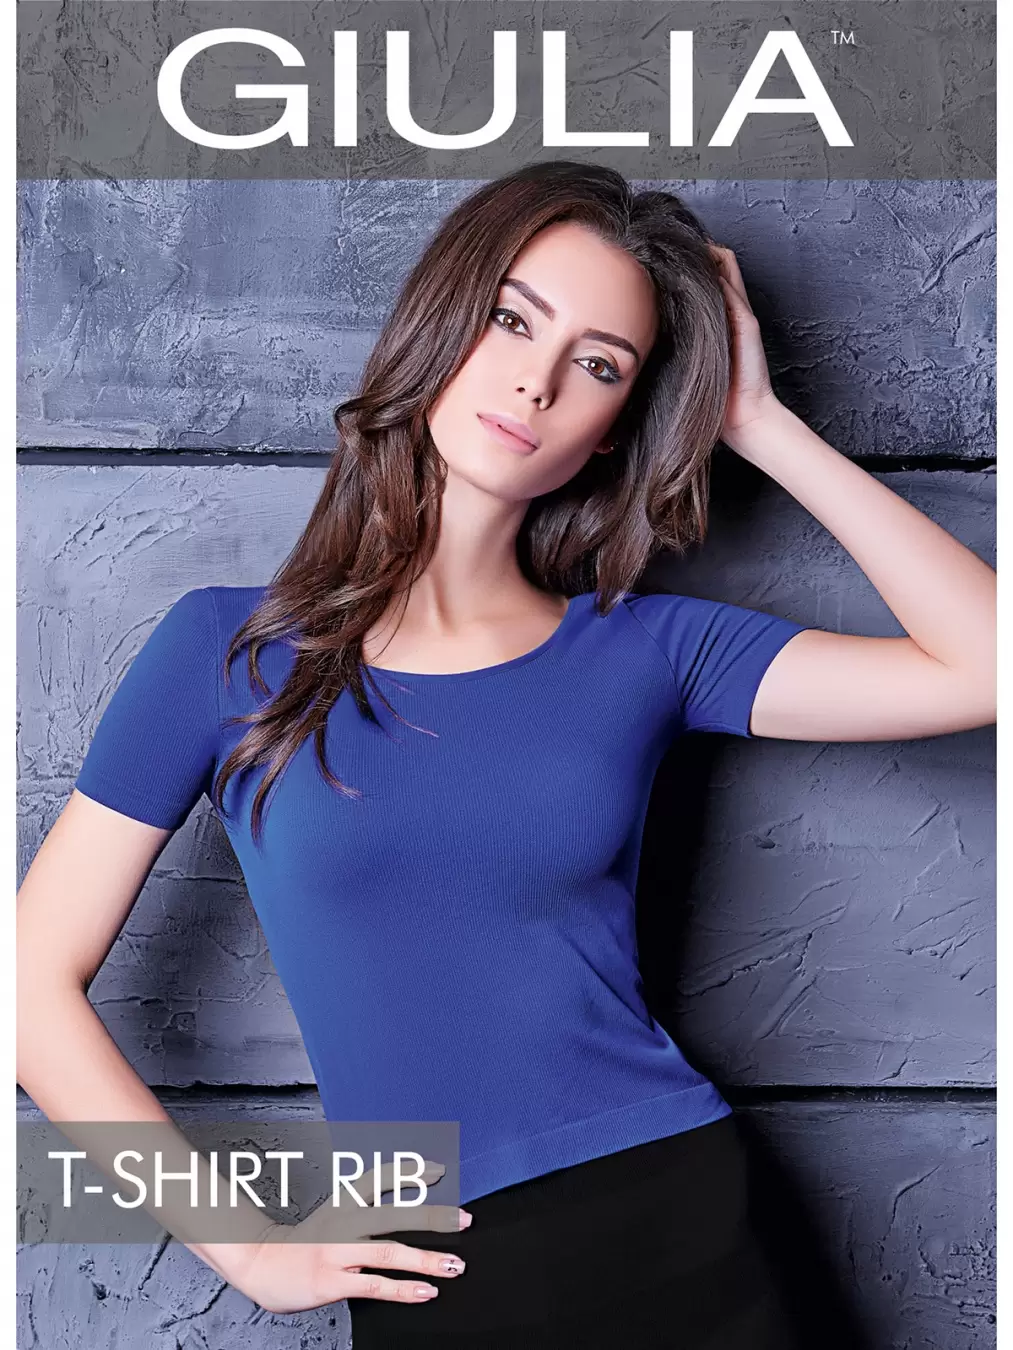 Giulia T-SHIRT RIB, бесшовная футболка (изображение 1)